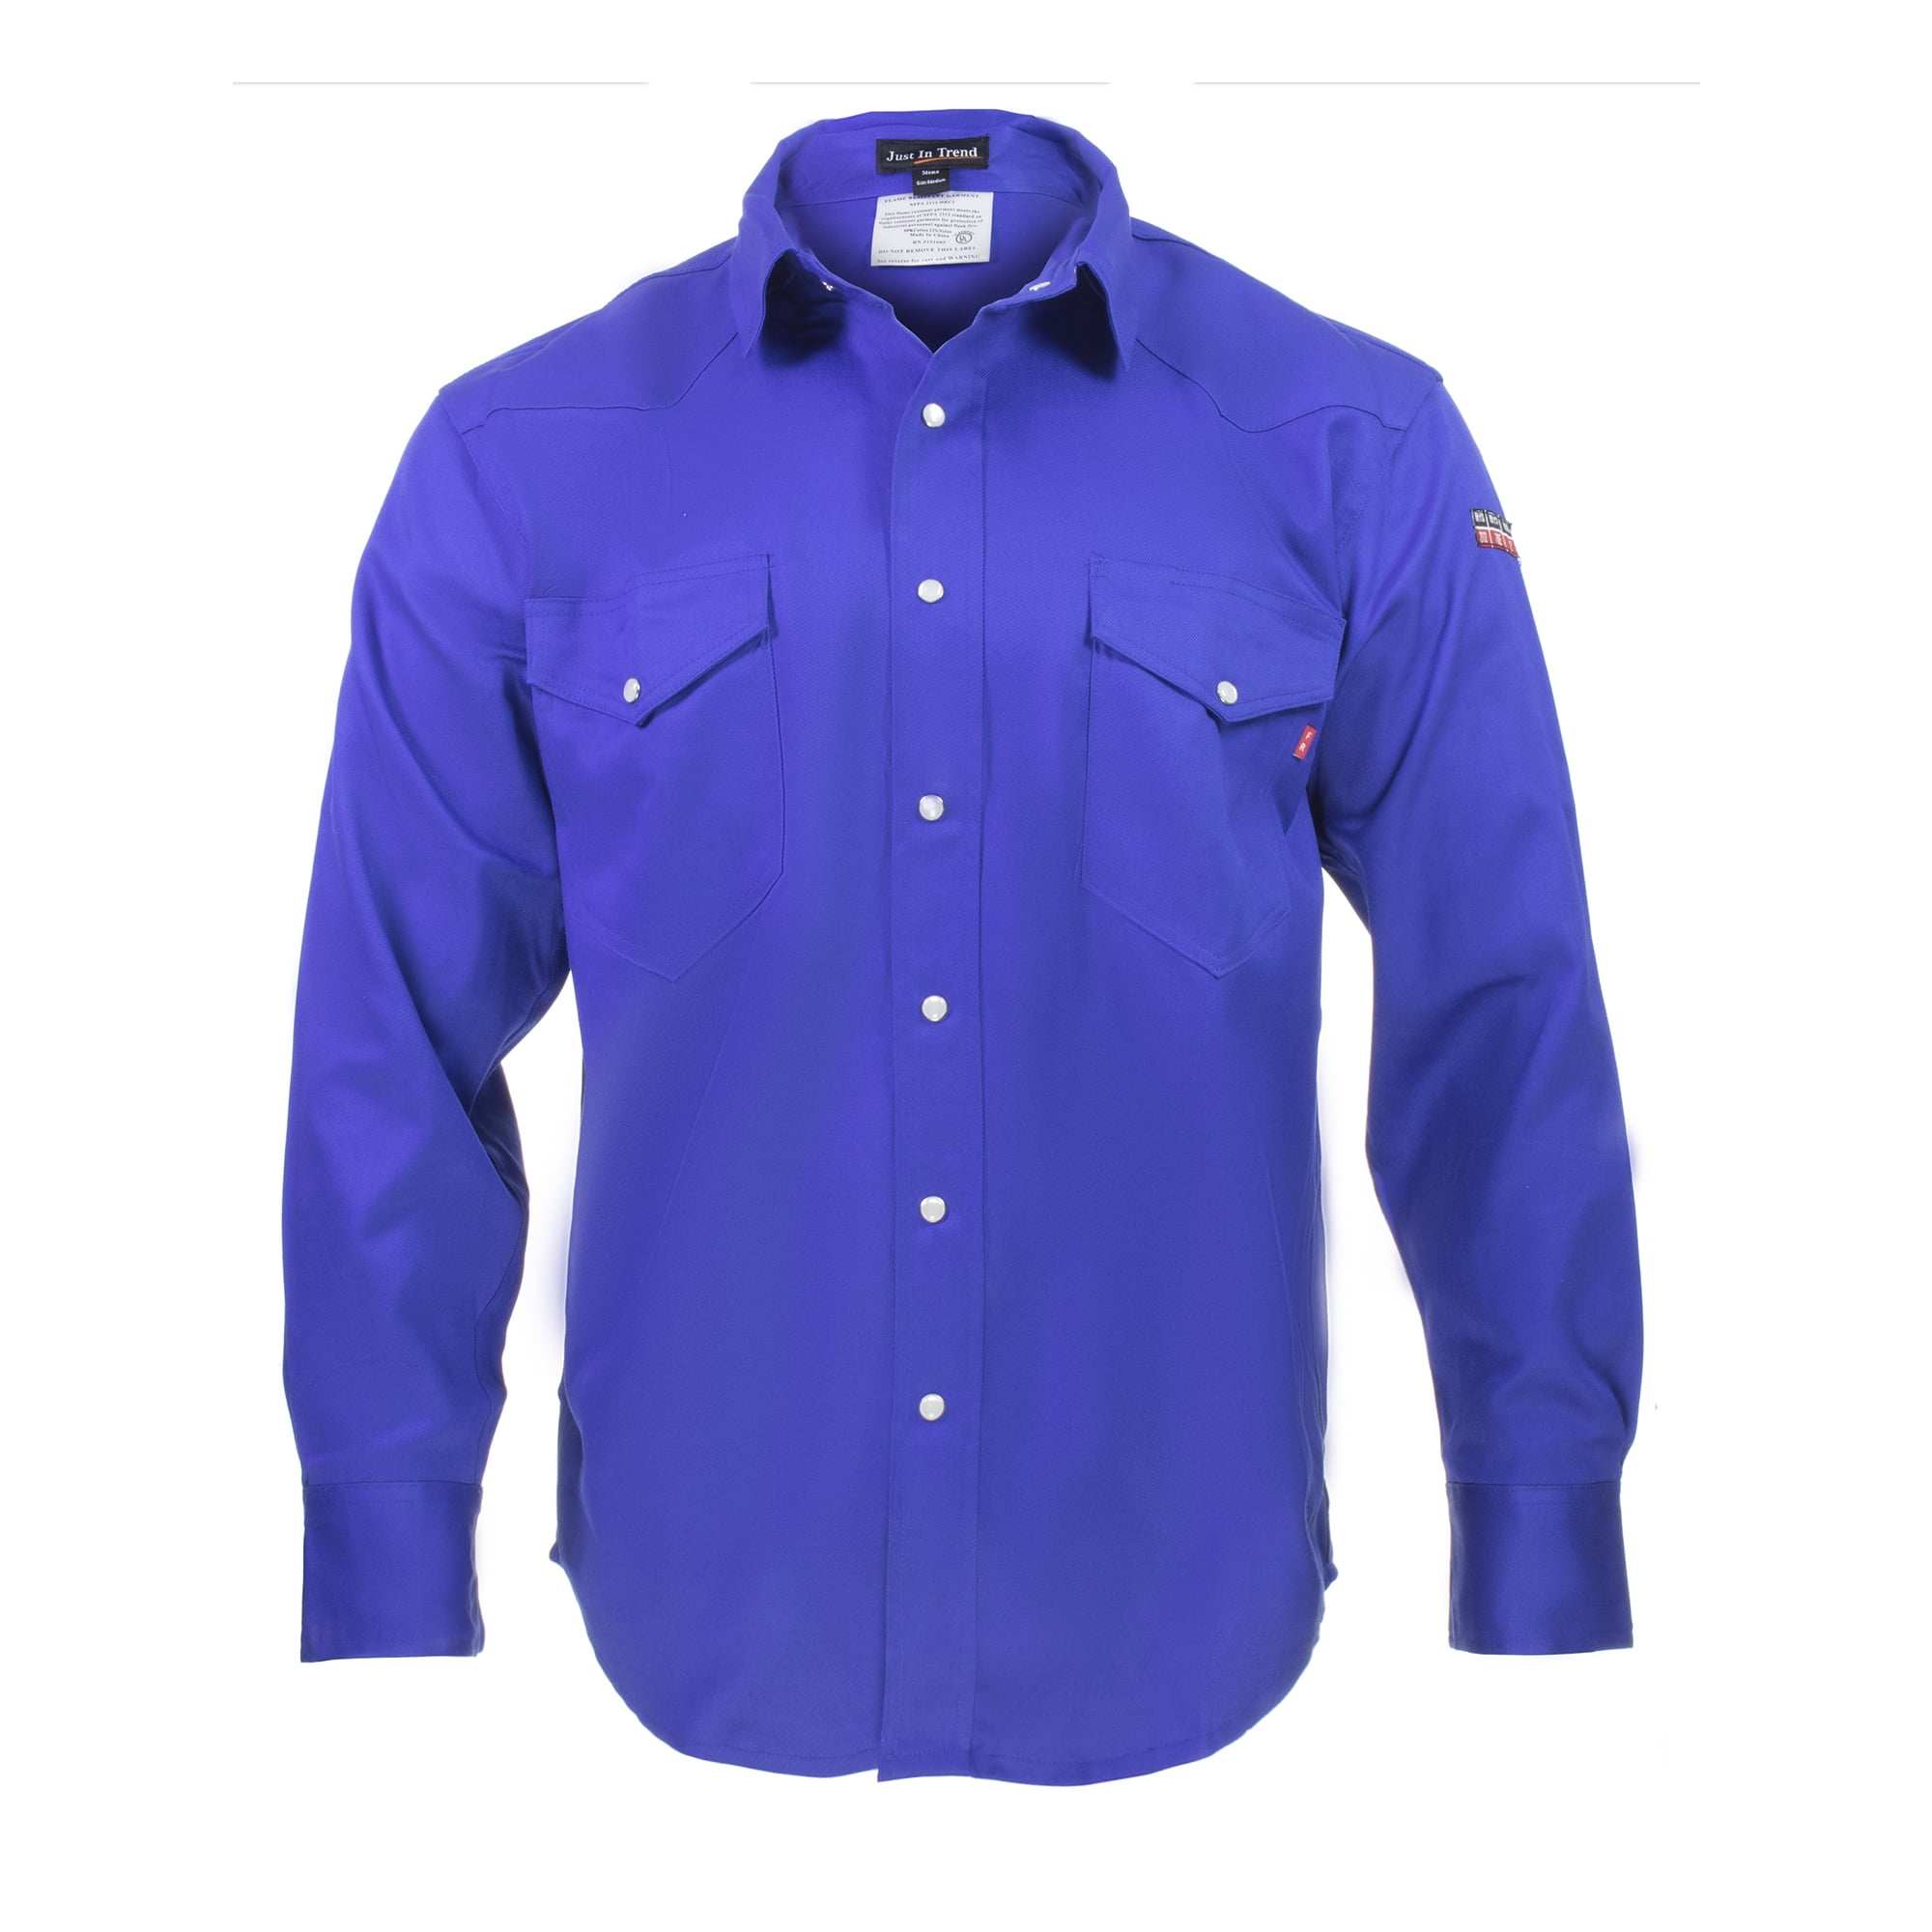 Flame Resistant FR Shirt - 88/12 (Medium, Royal Blue) - Walmart.com